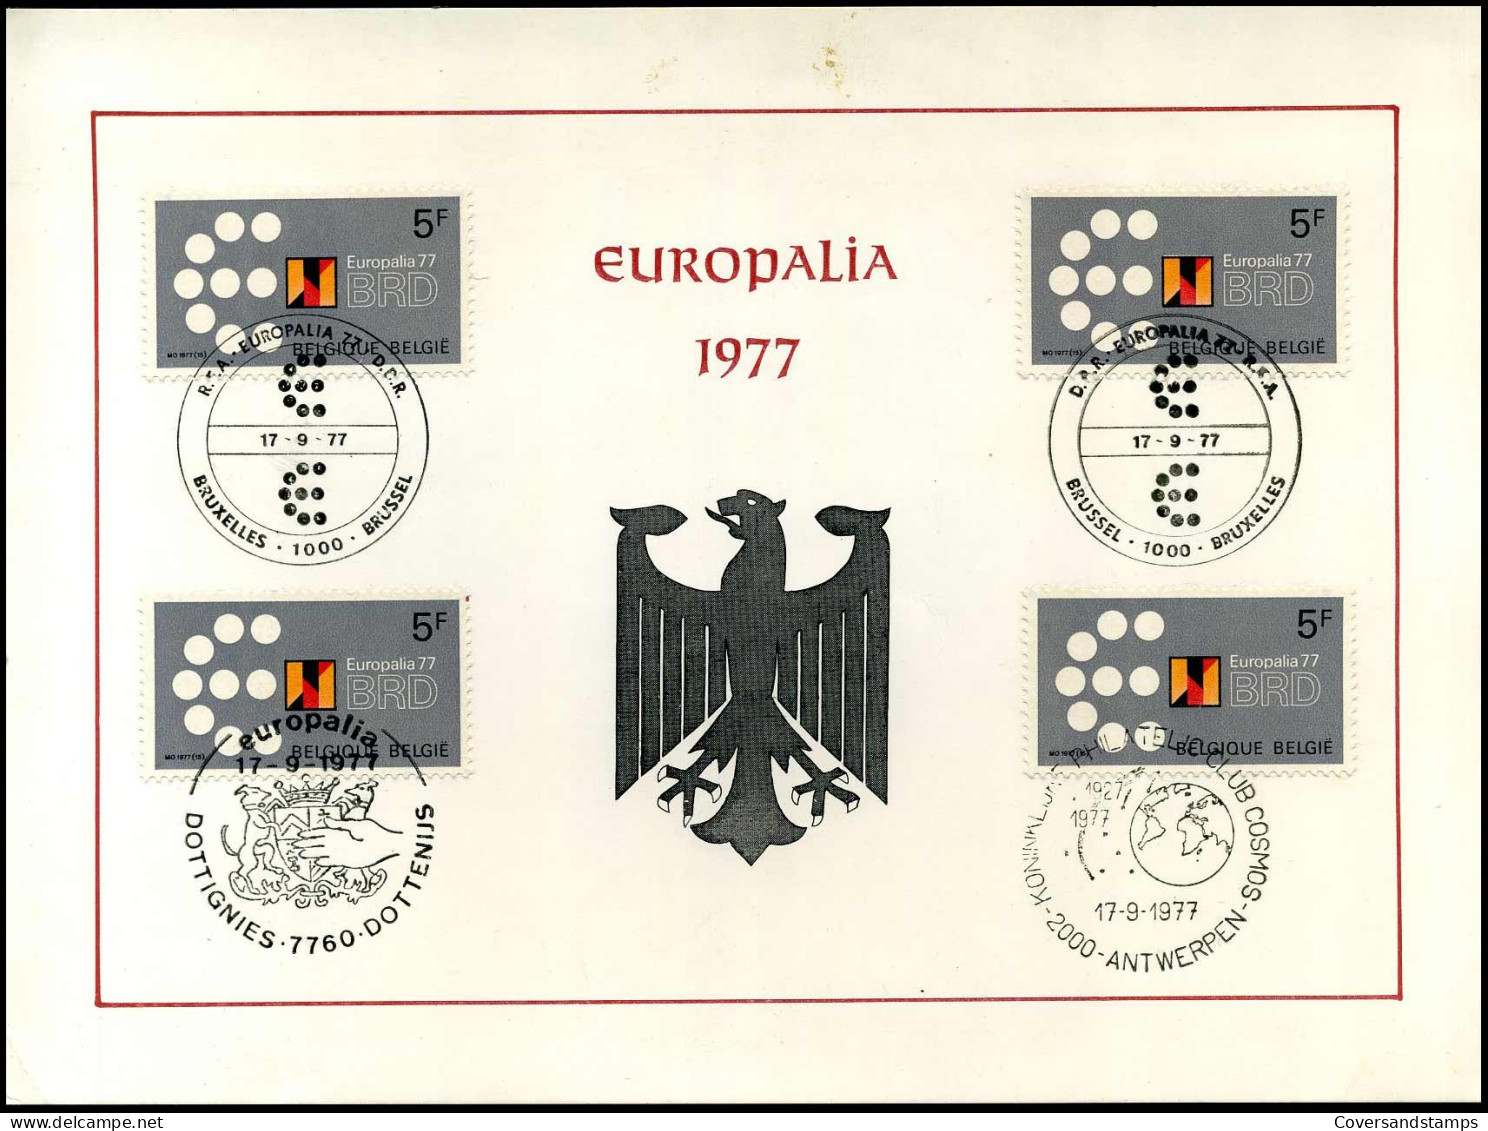 1867 - Europalia 1977 - Erinnerungskarten – Gemeinschaftsausgaben [HK]